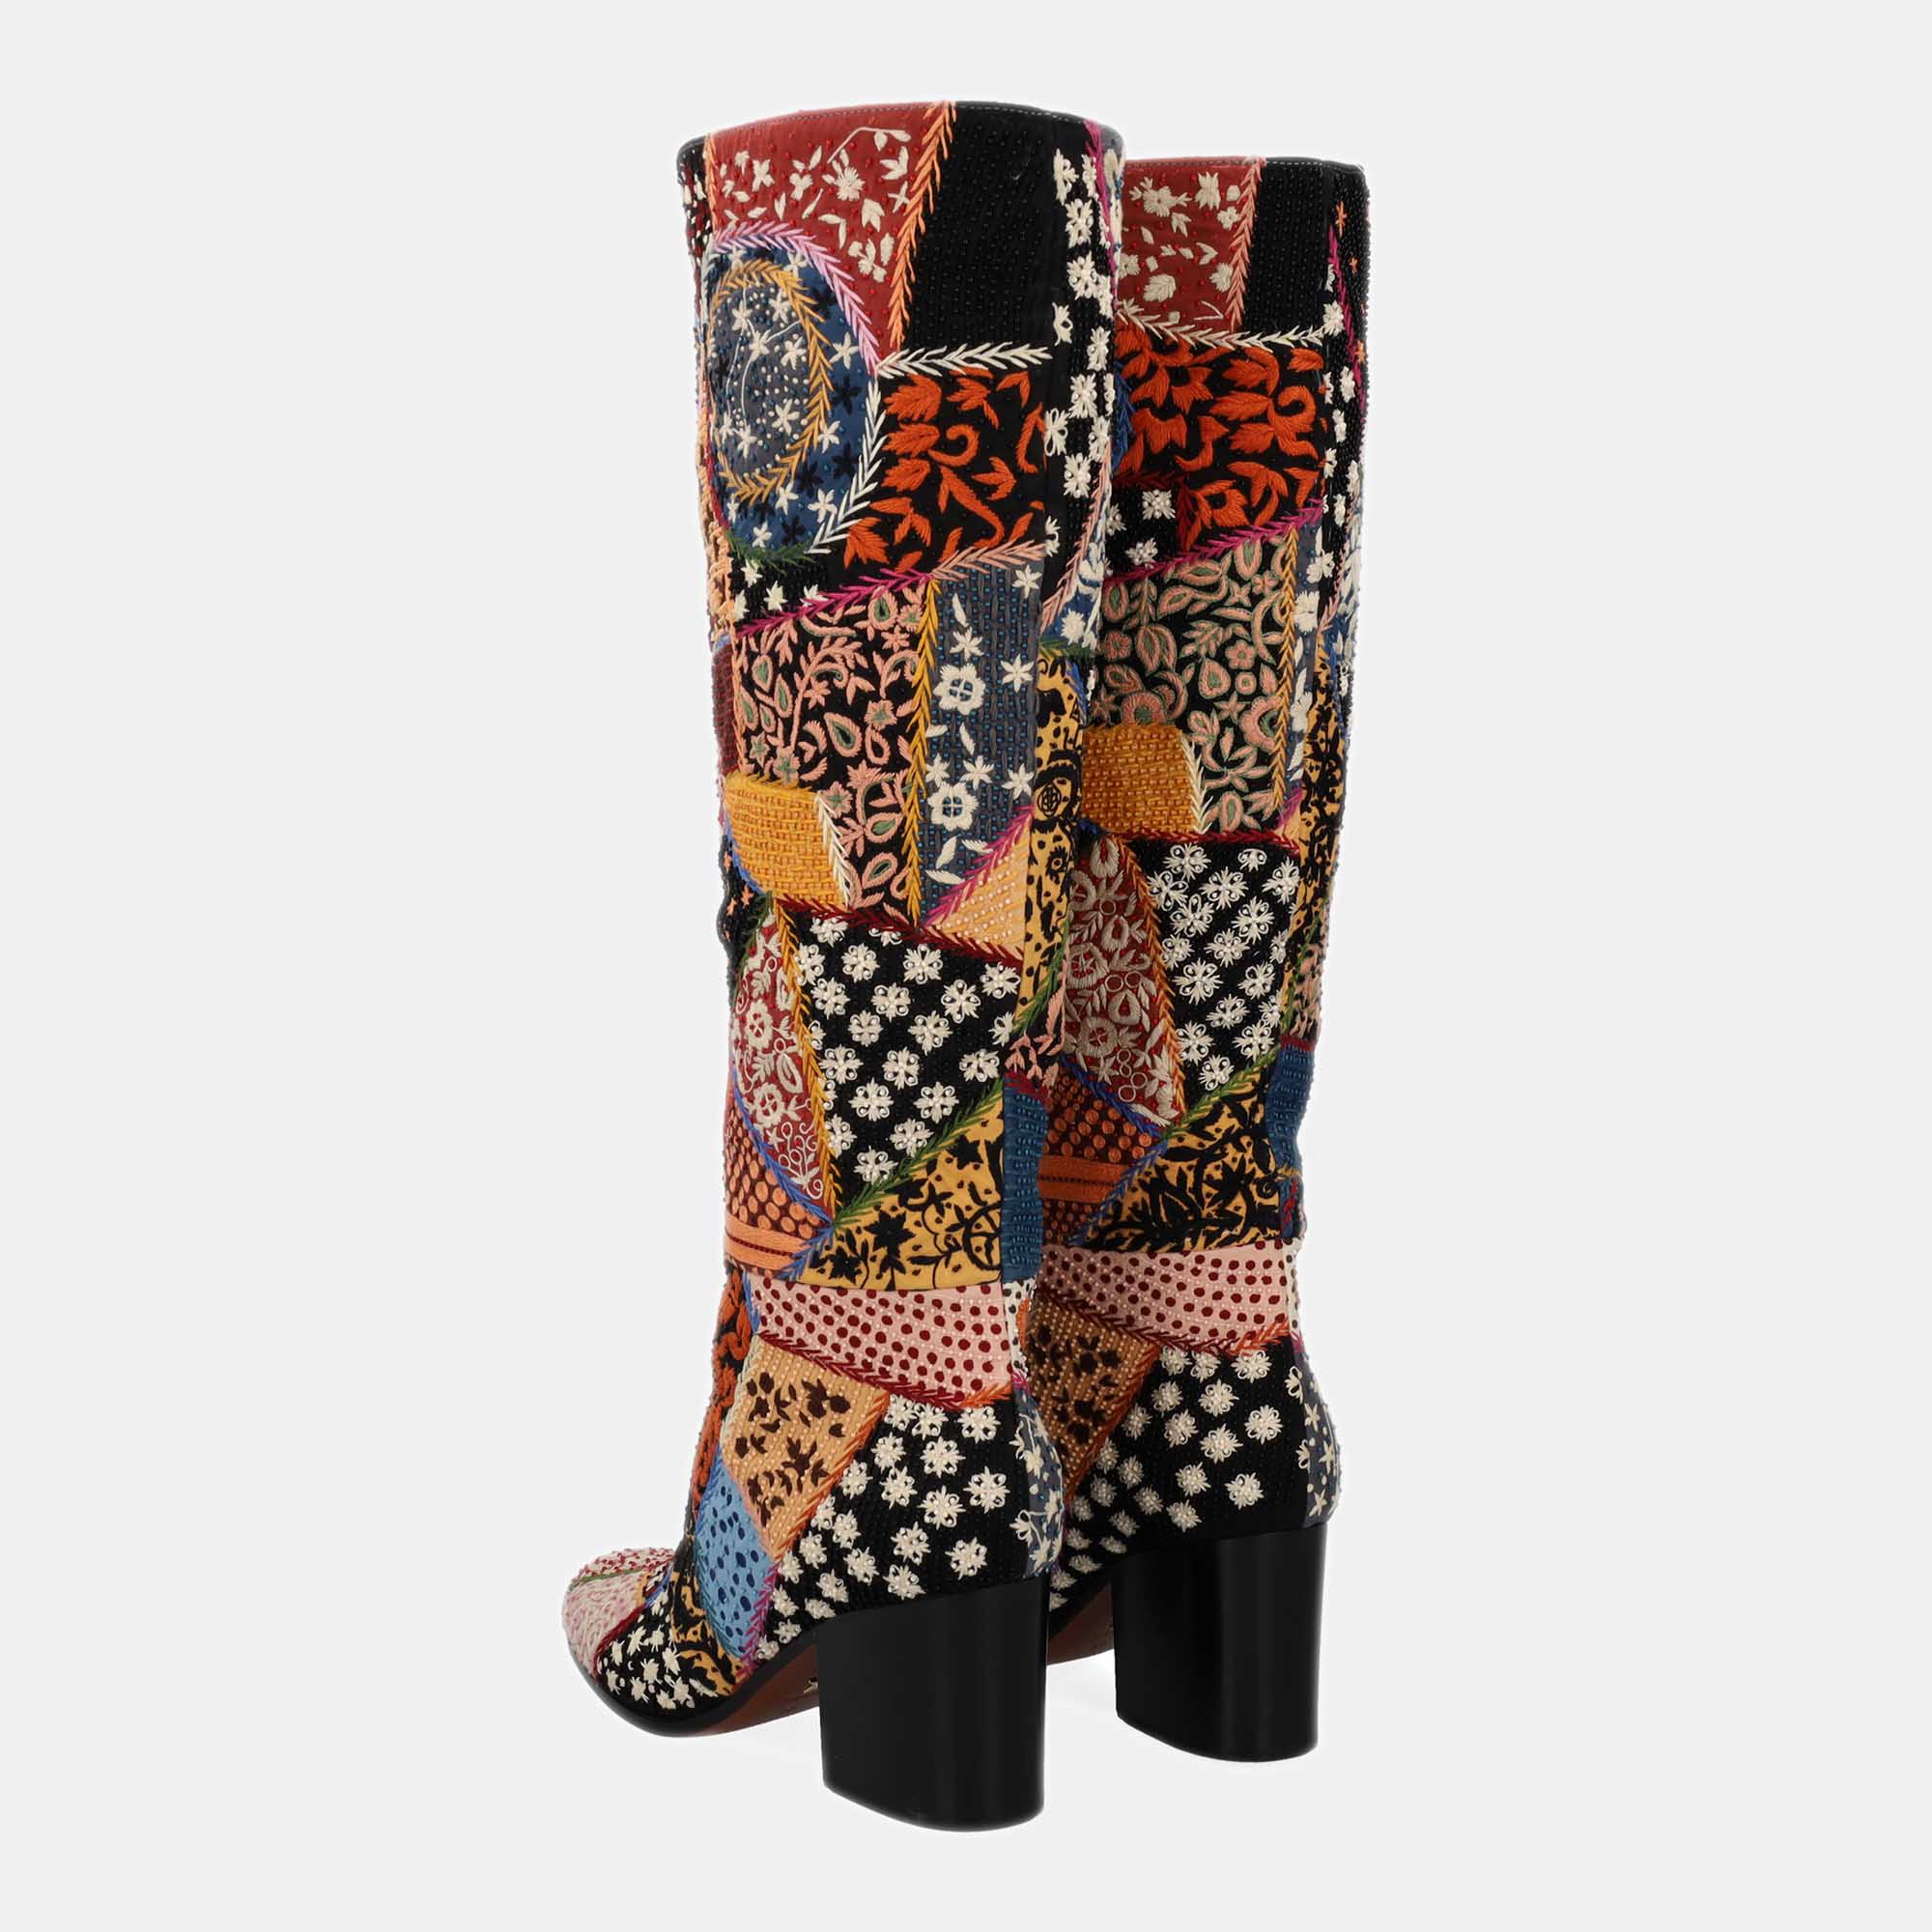 Dior  Women's Fabric Ankle Boots - Multicolor - EU 39